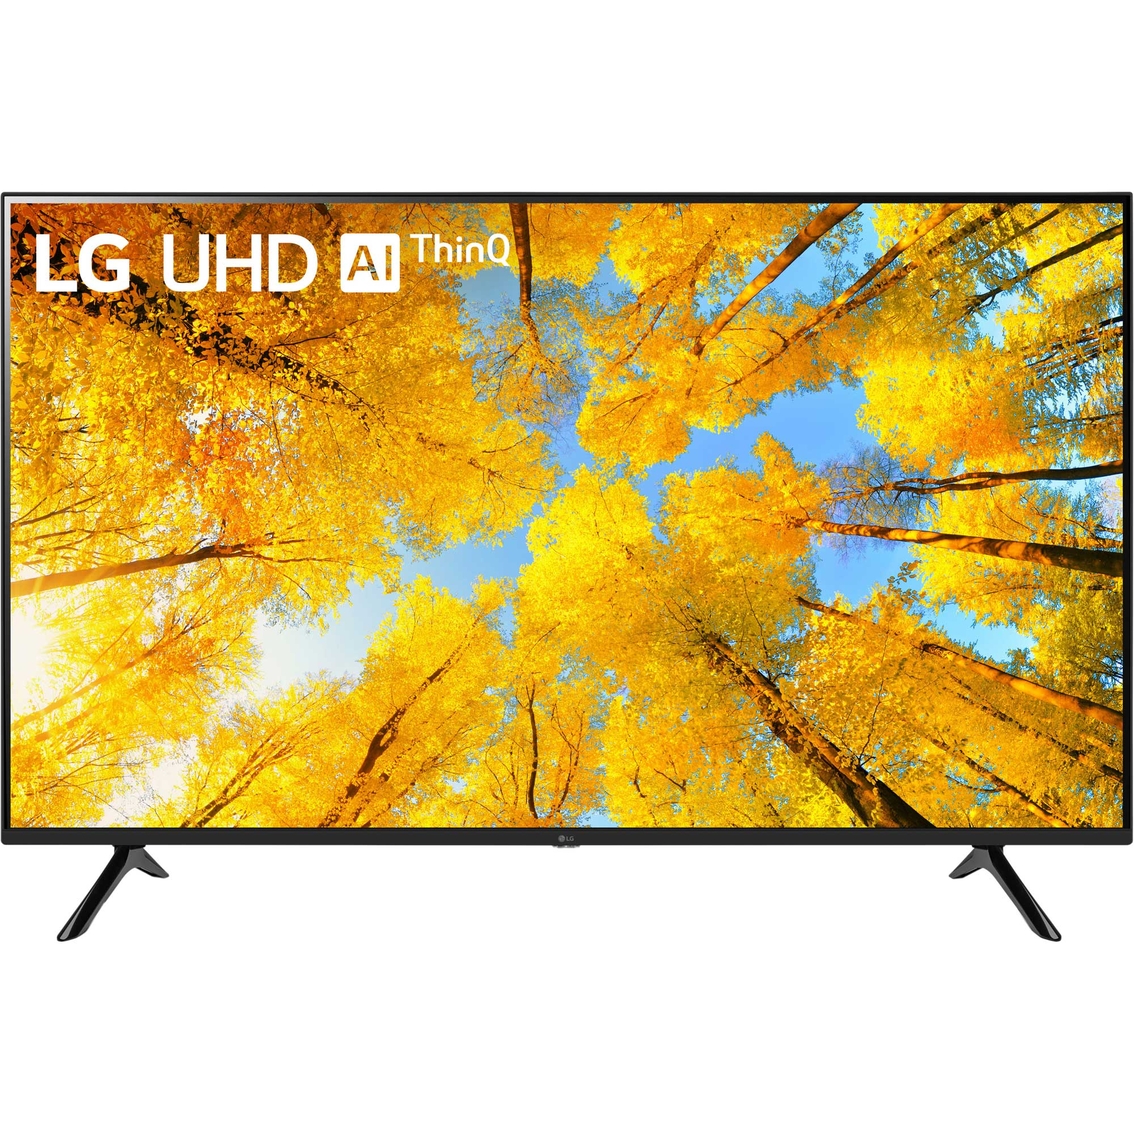 LG 50” 4K HDR Smart LED UHD TV w/AI ThinQ, mint condition